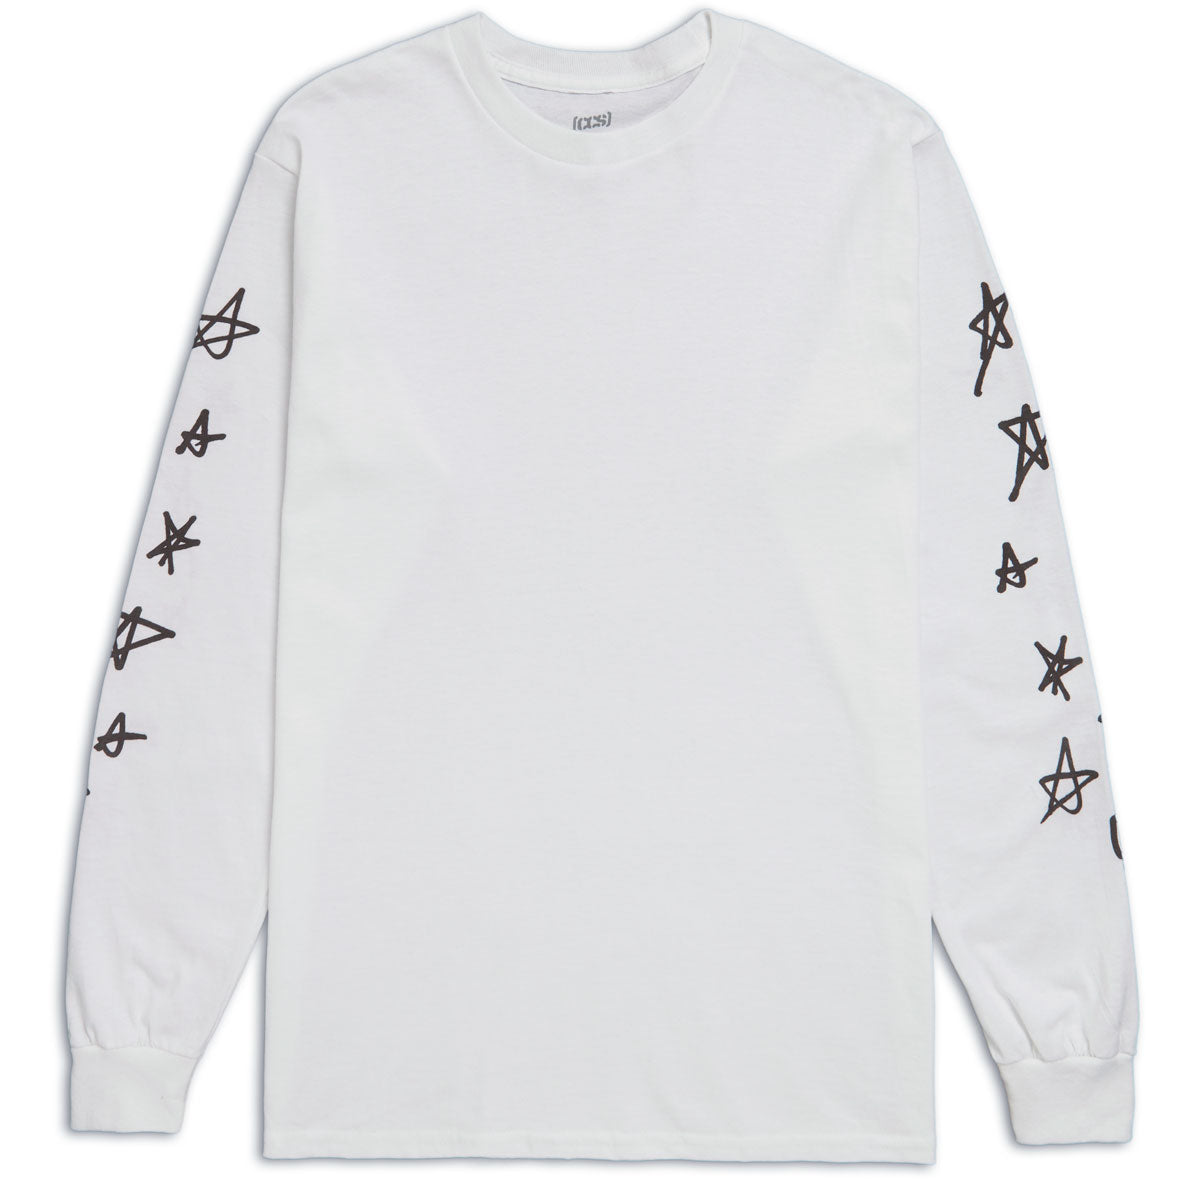 CCS Stars Long Sleeve T-Shirt - White/Black - SM image 1